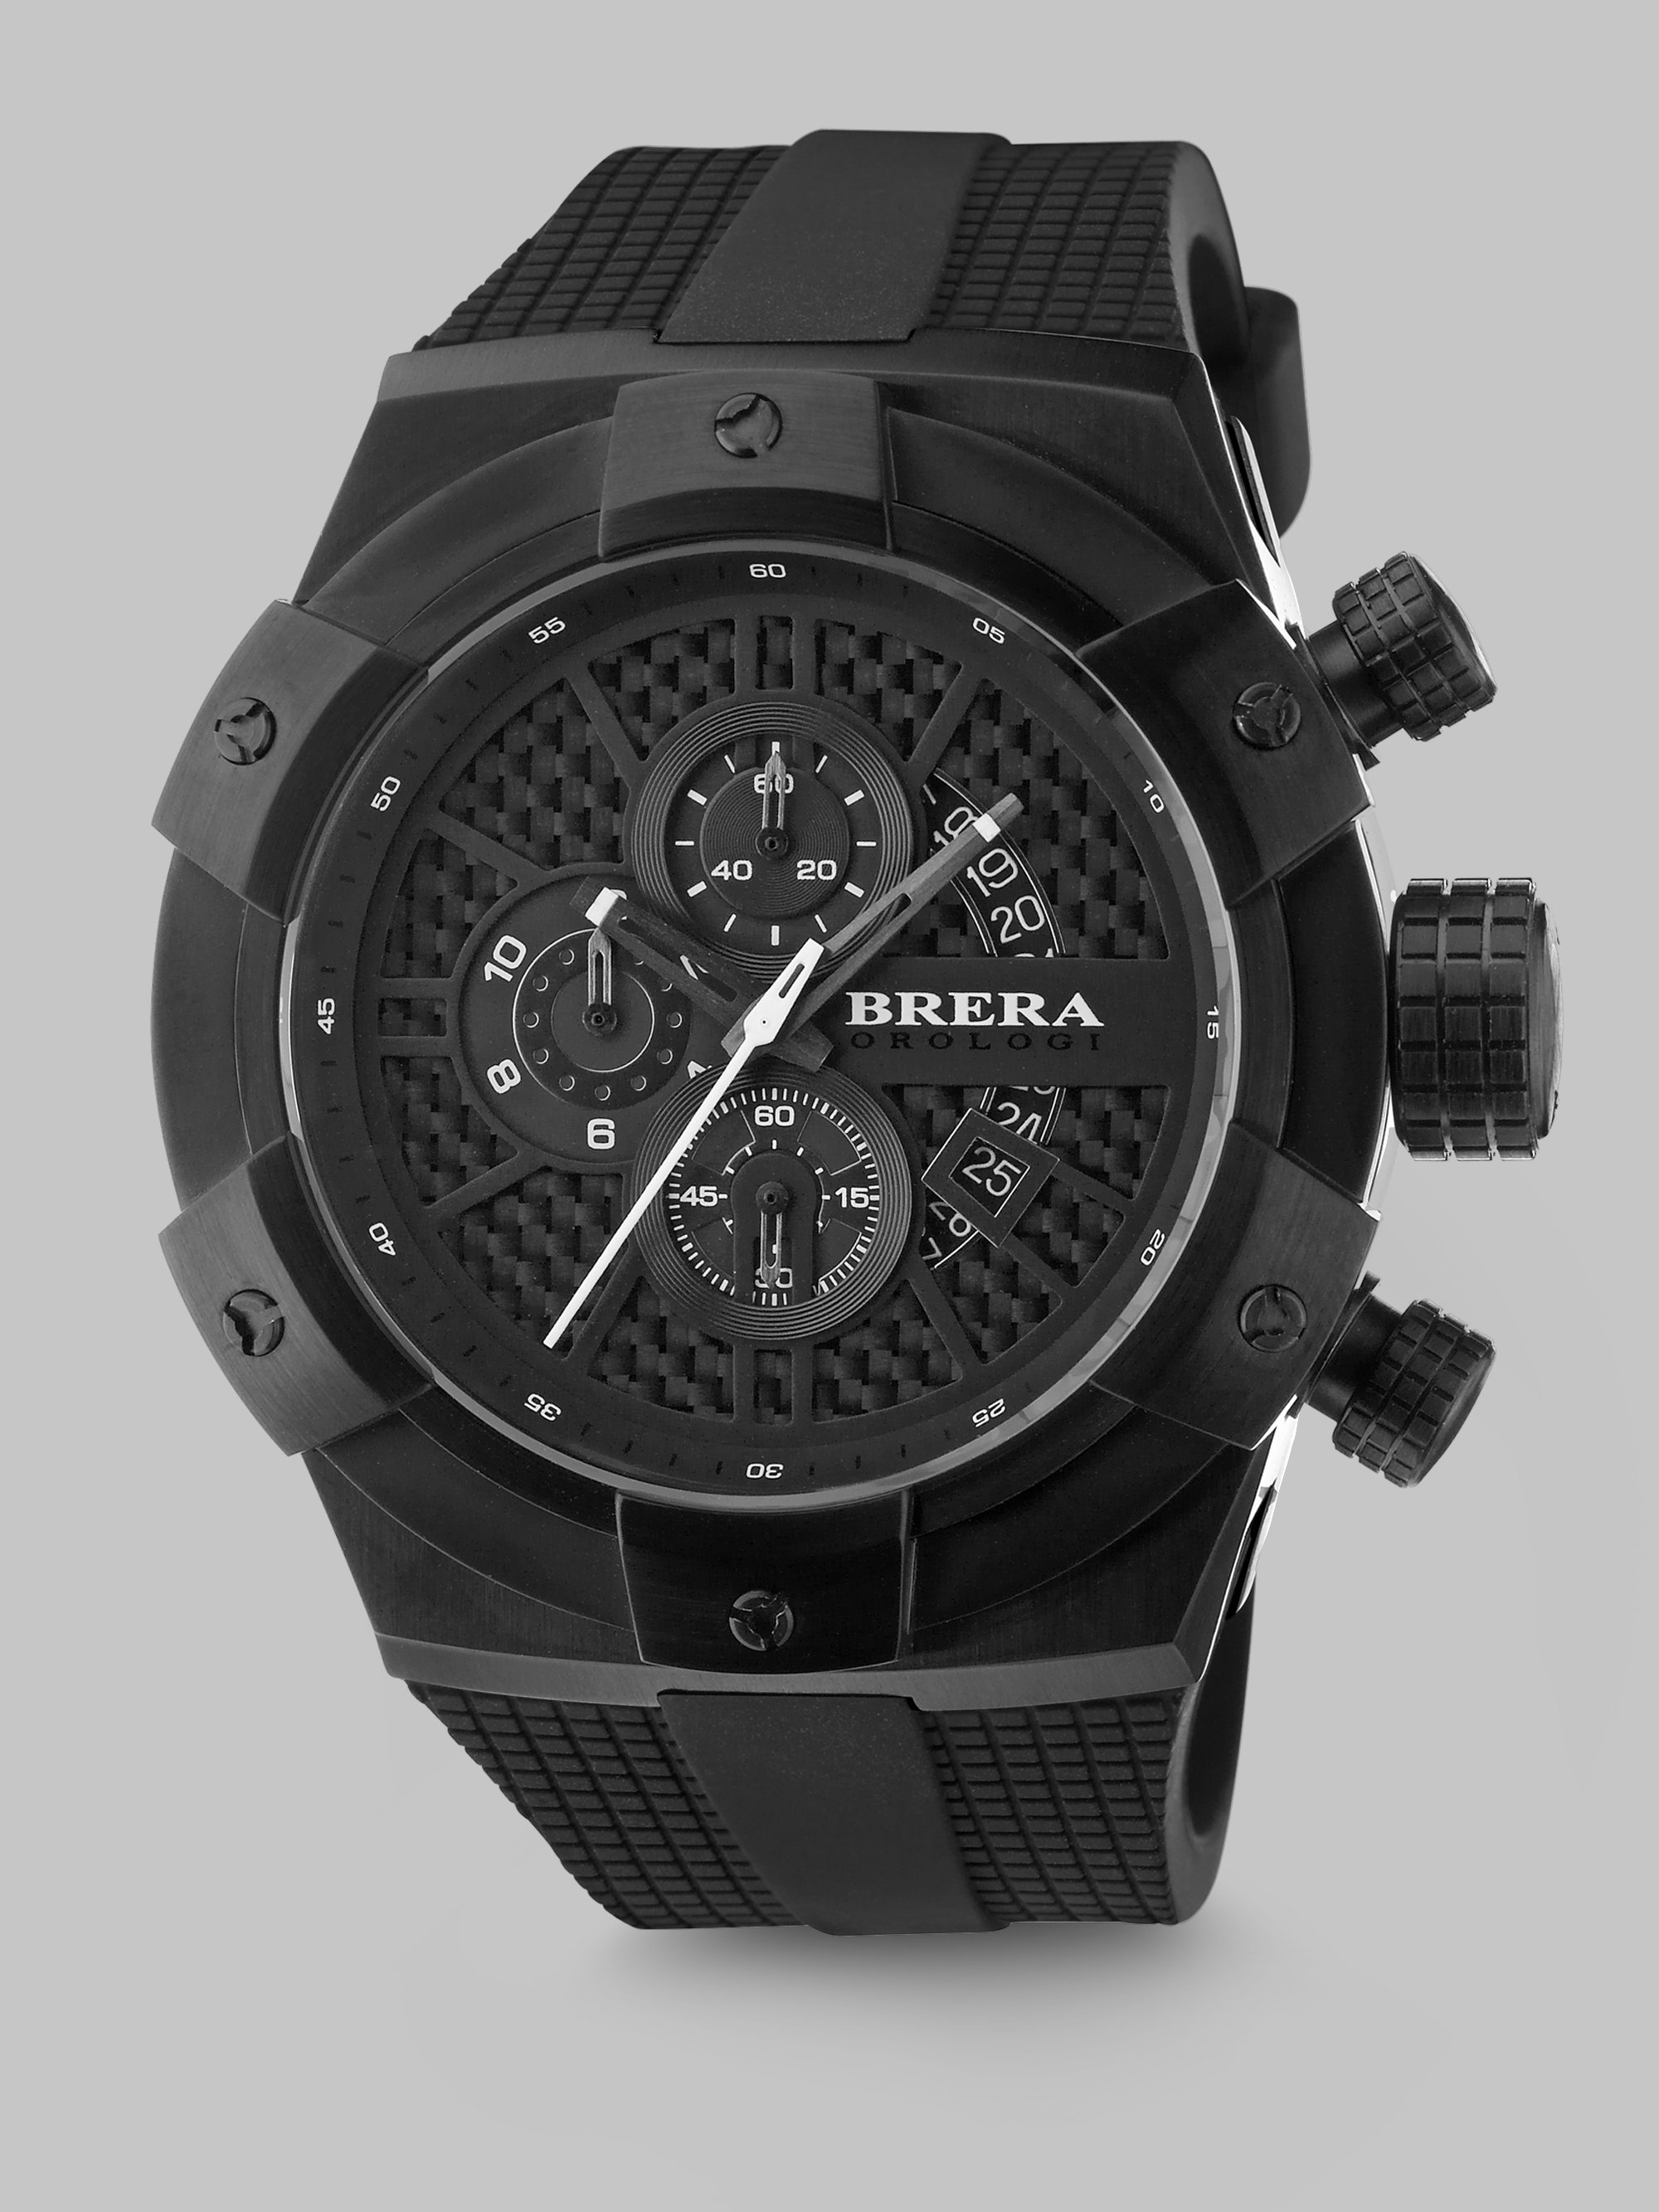 Lyst - Brera Orologi Supersportivo Chronograph Watch in Black for Men